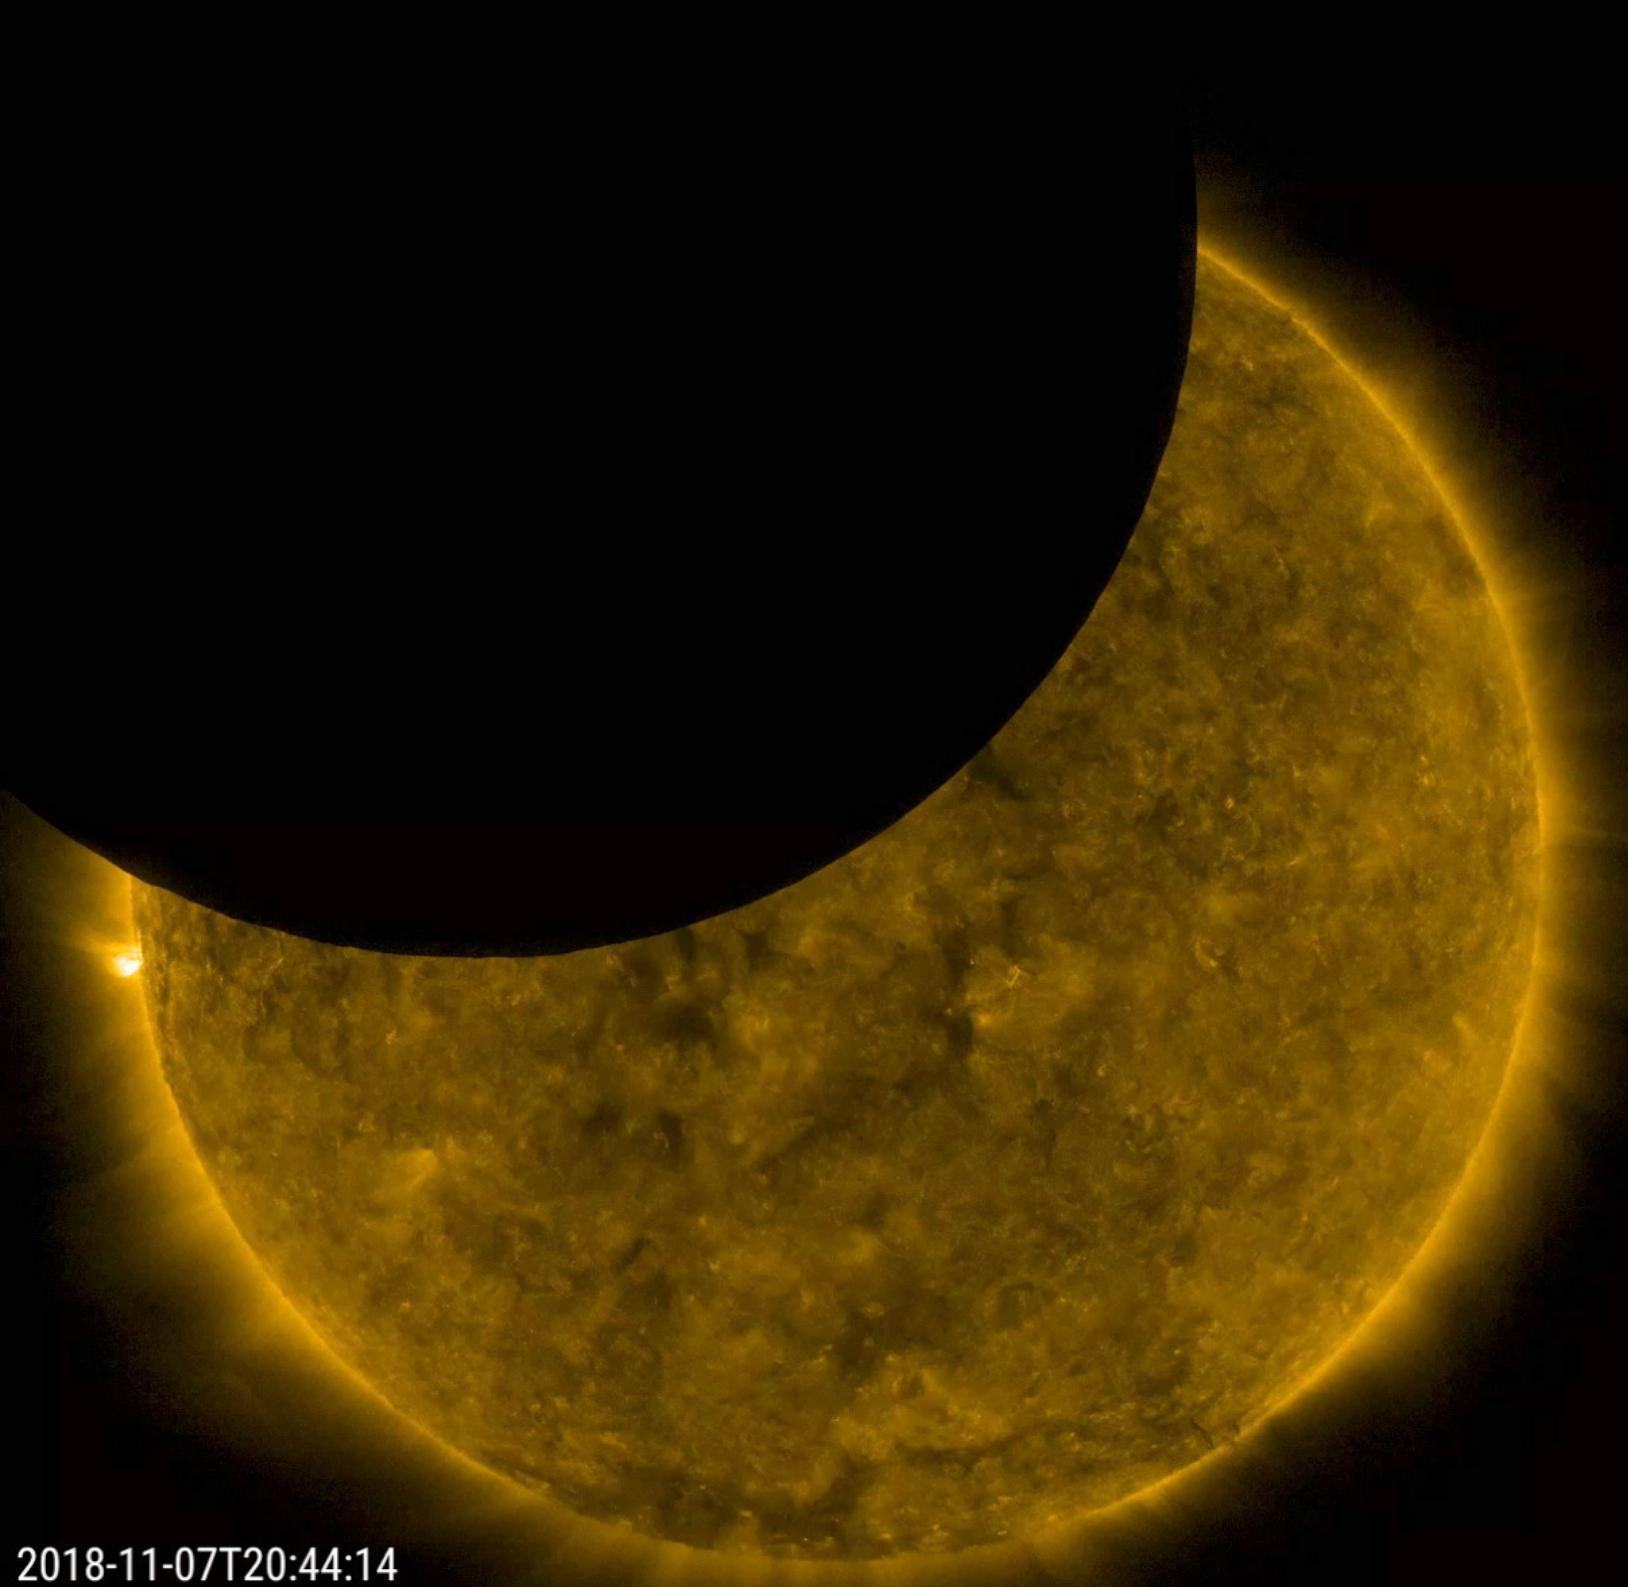 Space Image. SDO Observes a Partial Lunar Eclipse